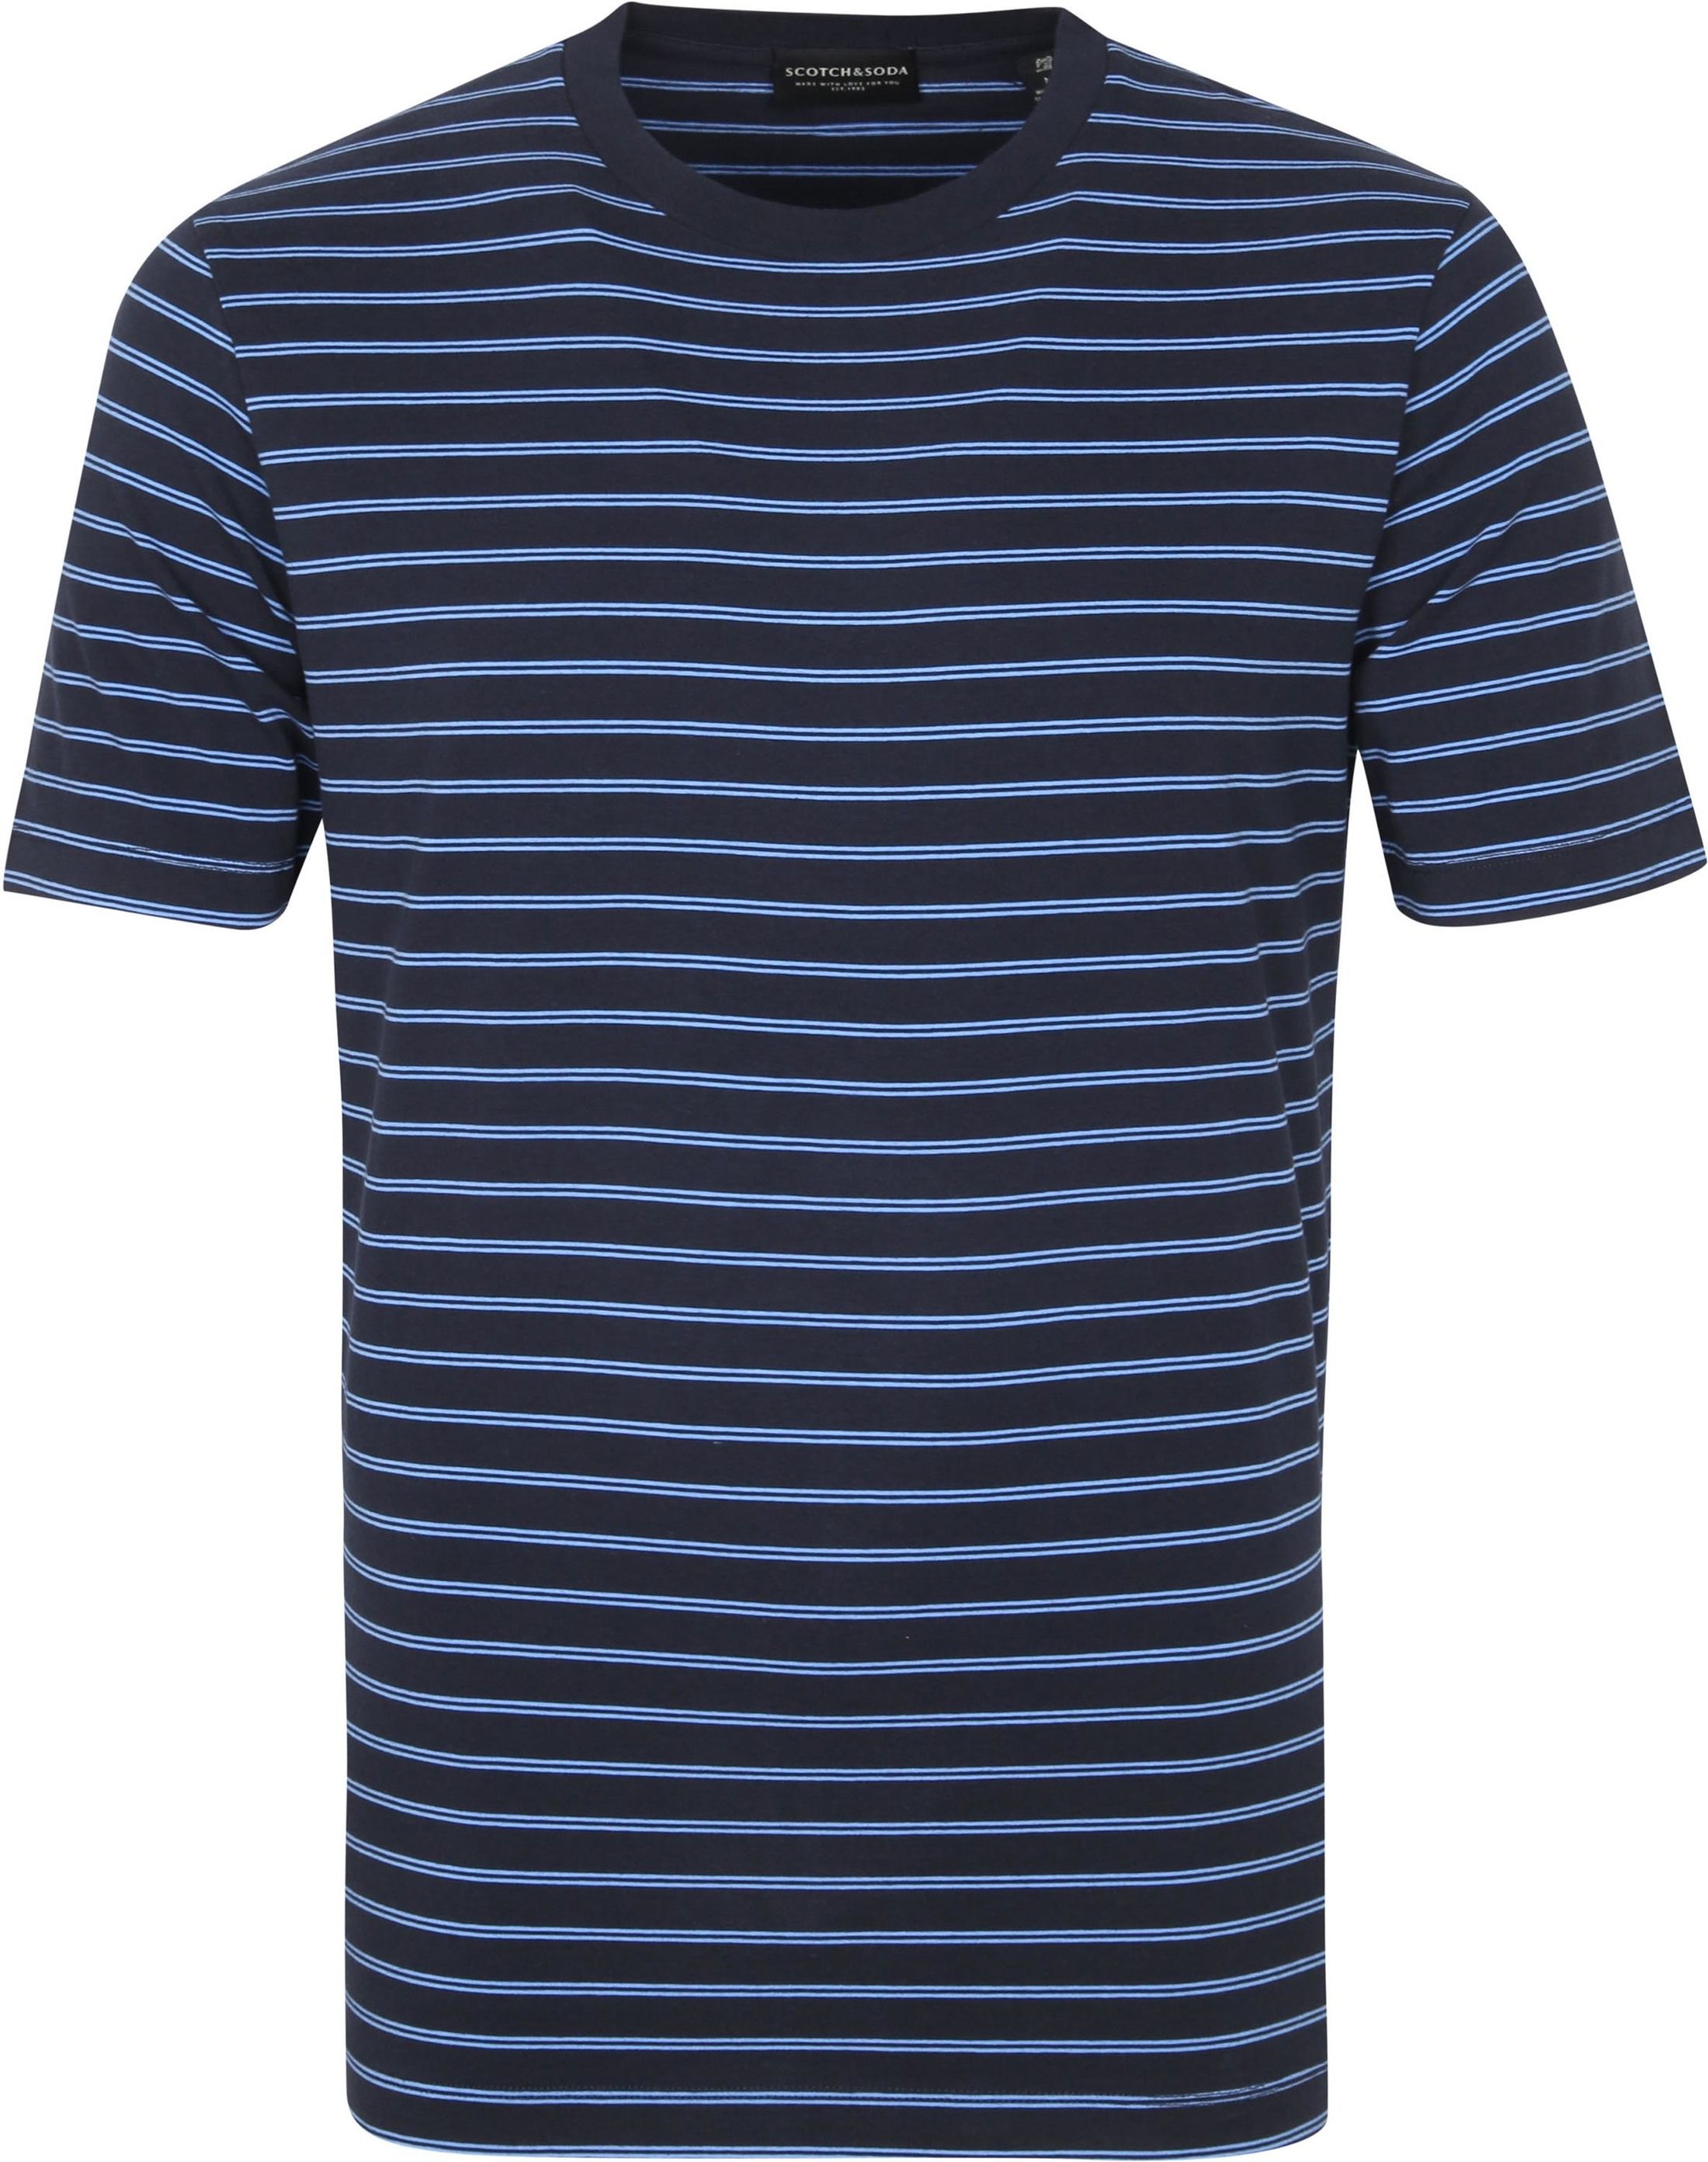 Scotch & Soda T Shirt Stripe Navy Blue Dark Blue size M